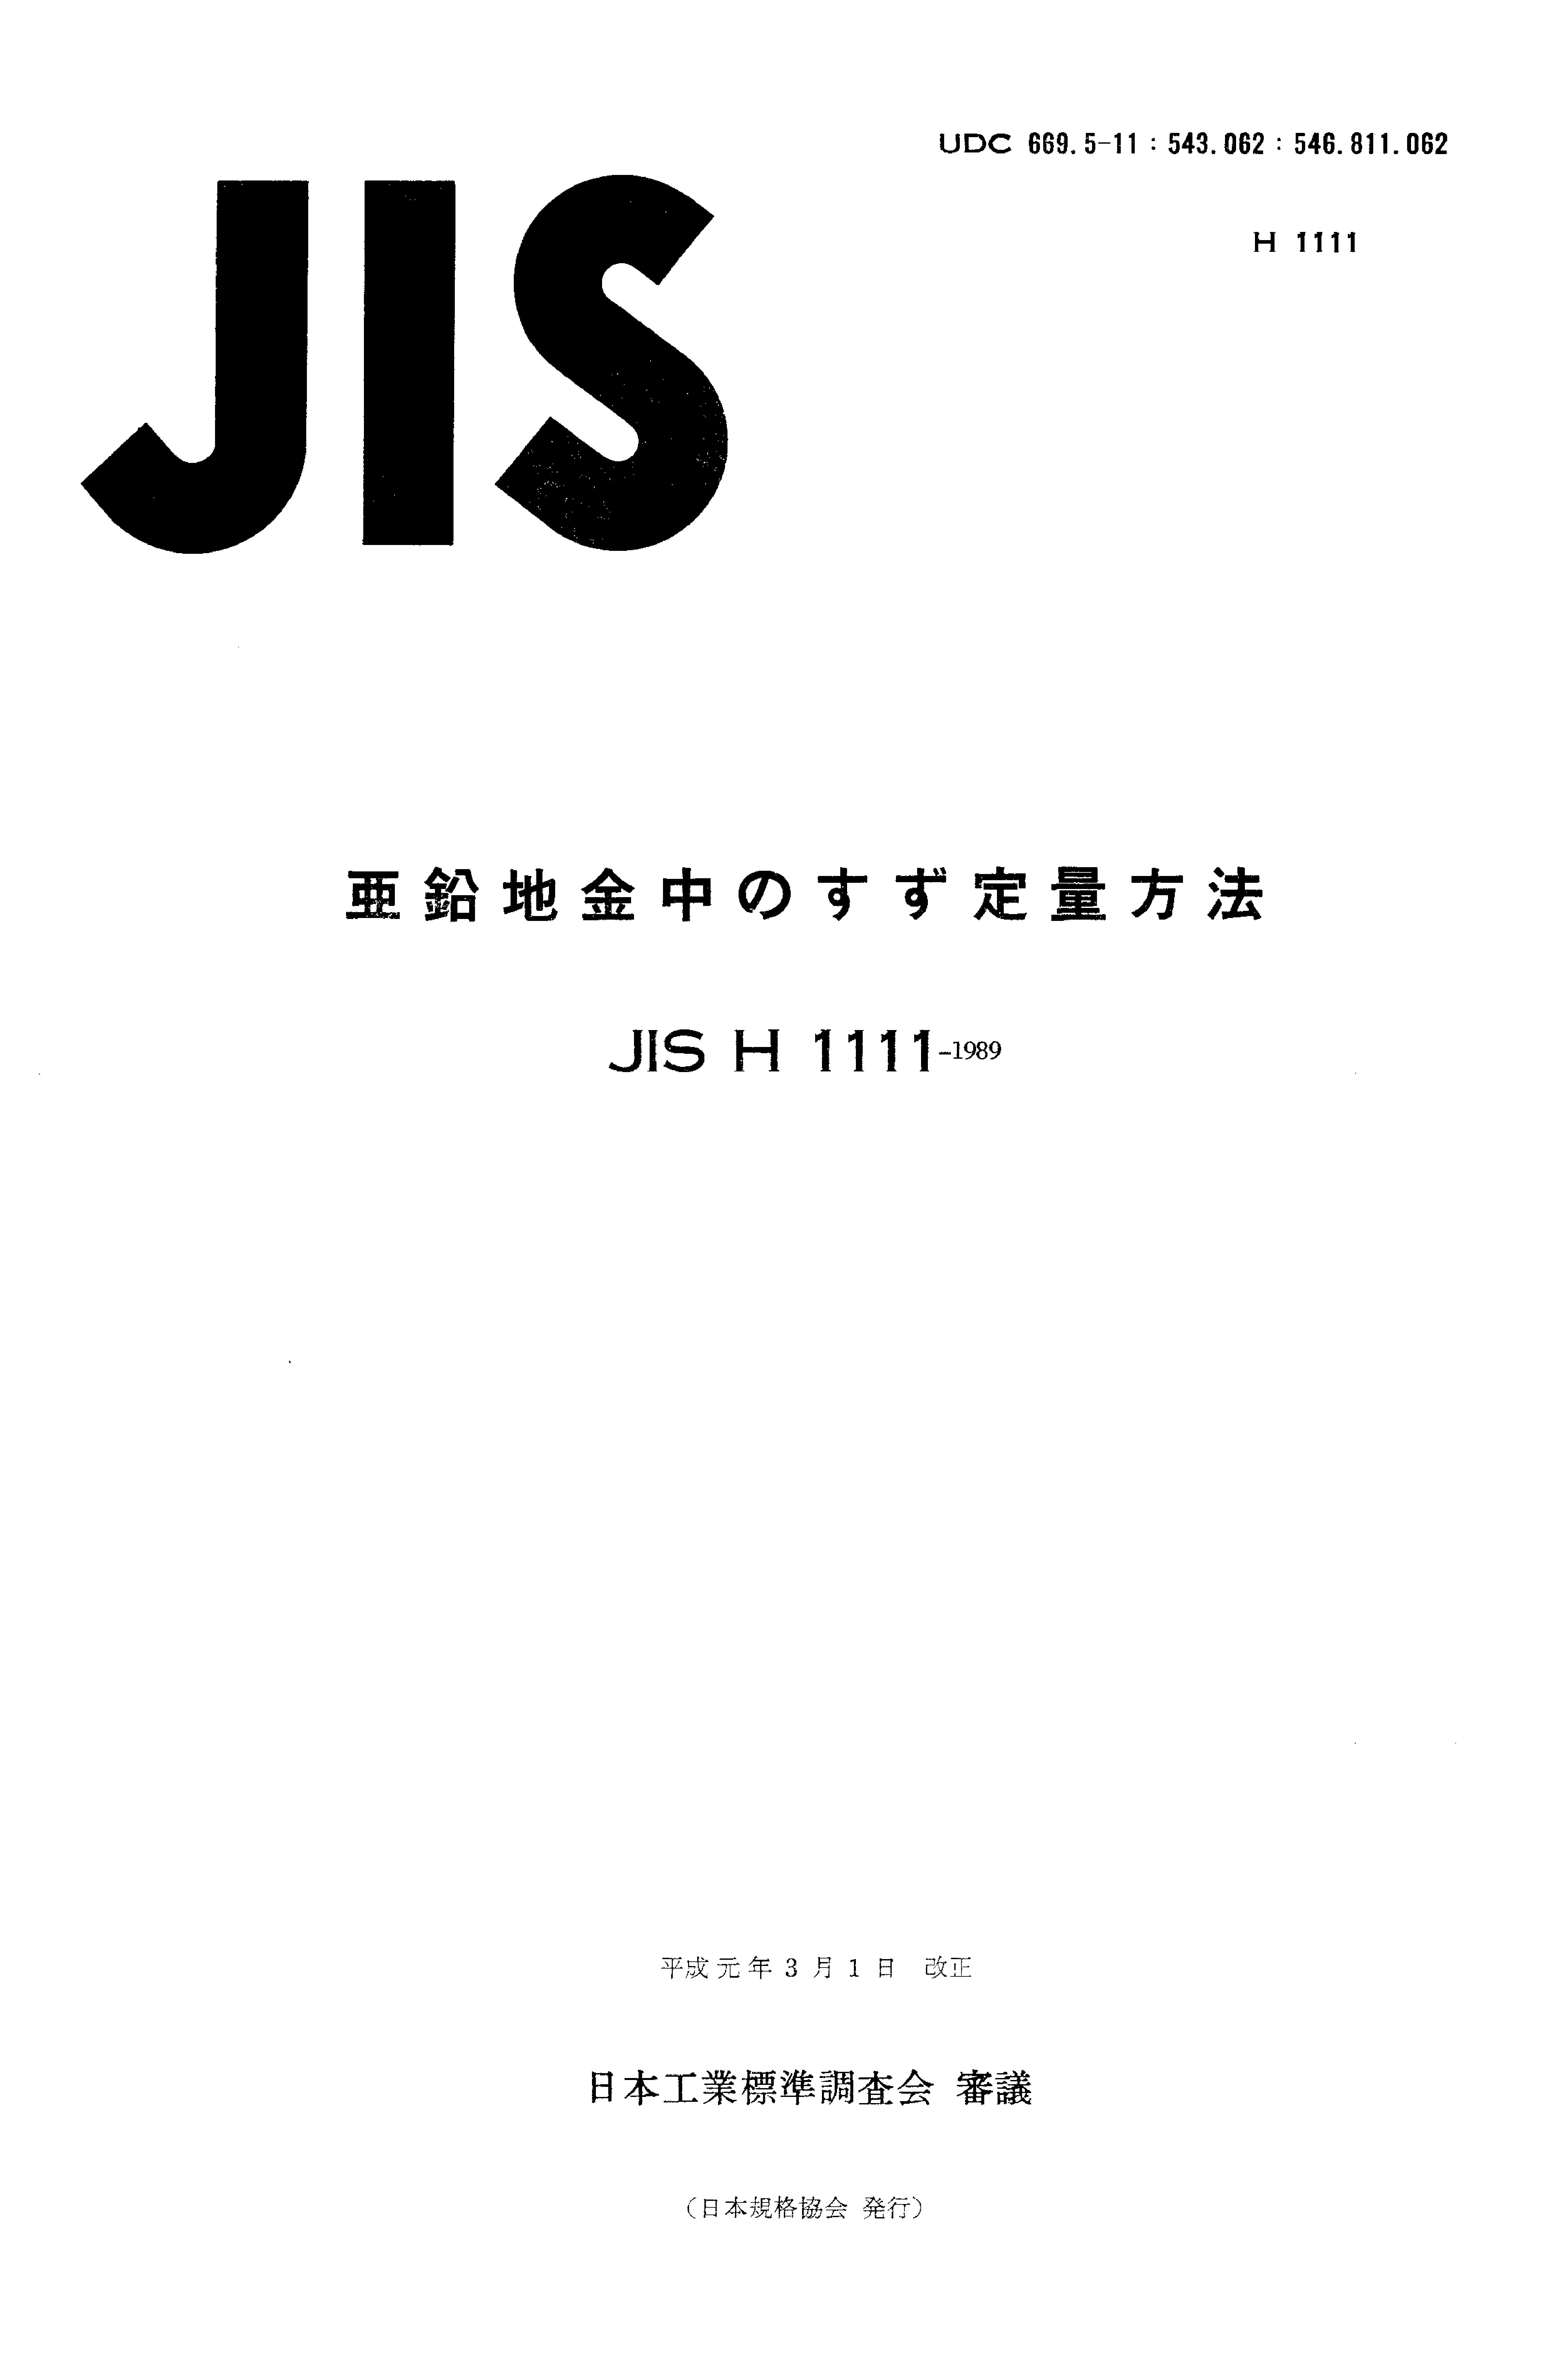 JIS H 1111:1989